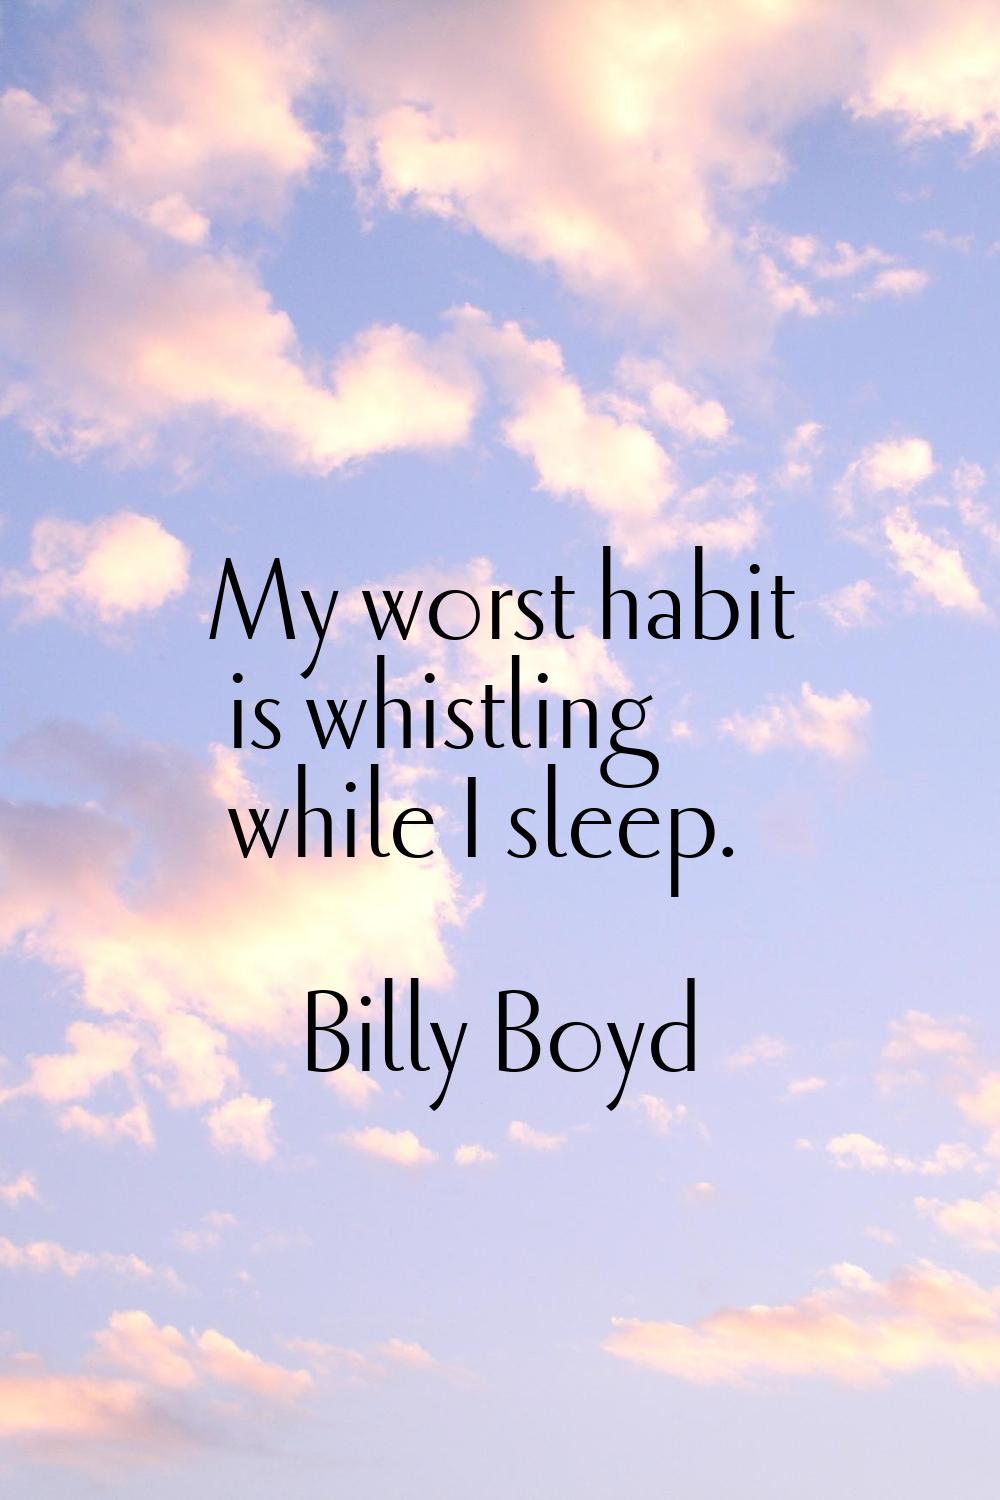 My worst habit is whistling while I sleep.